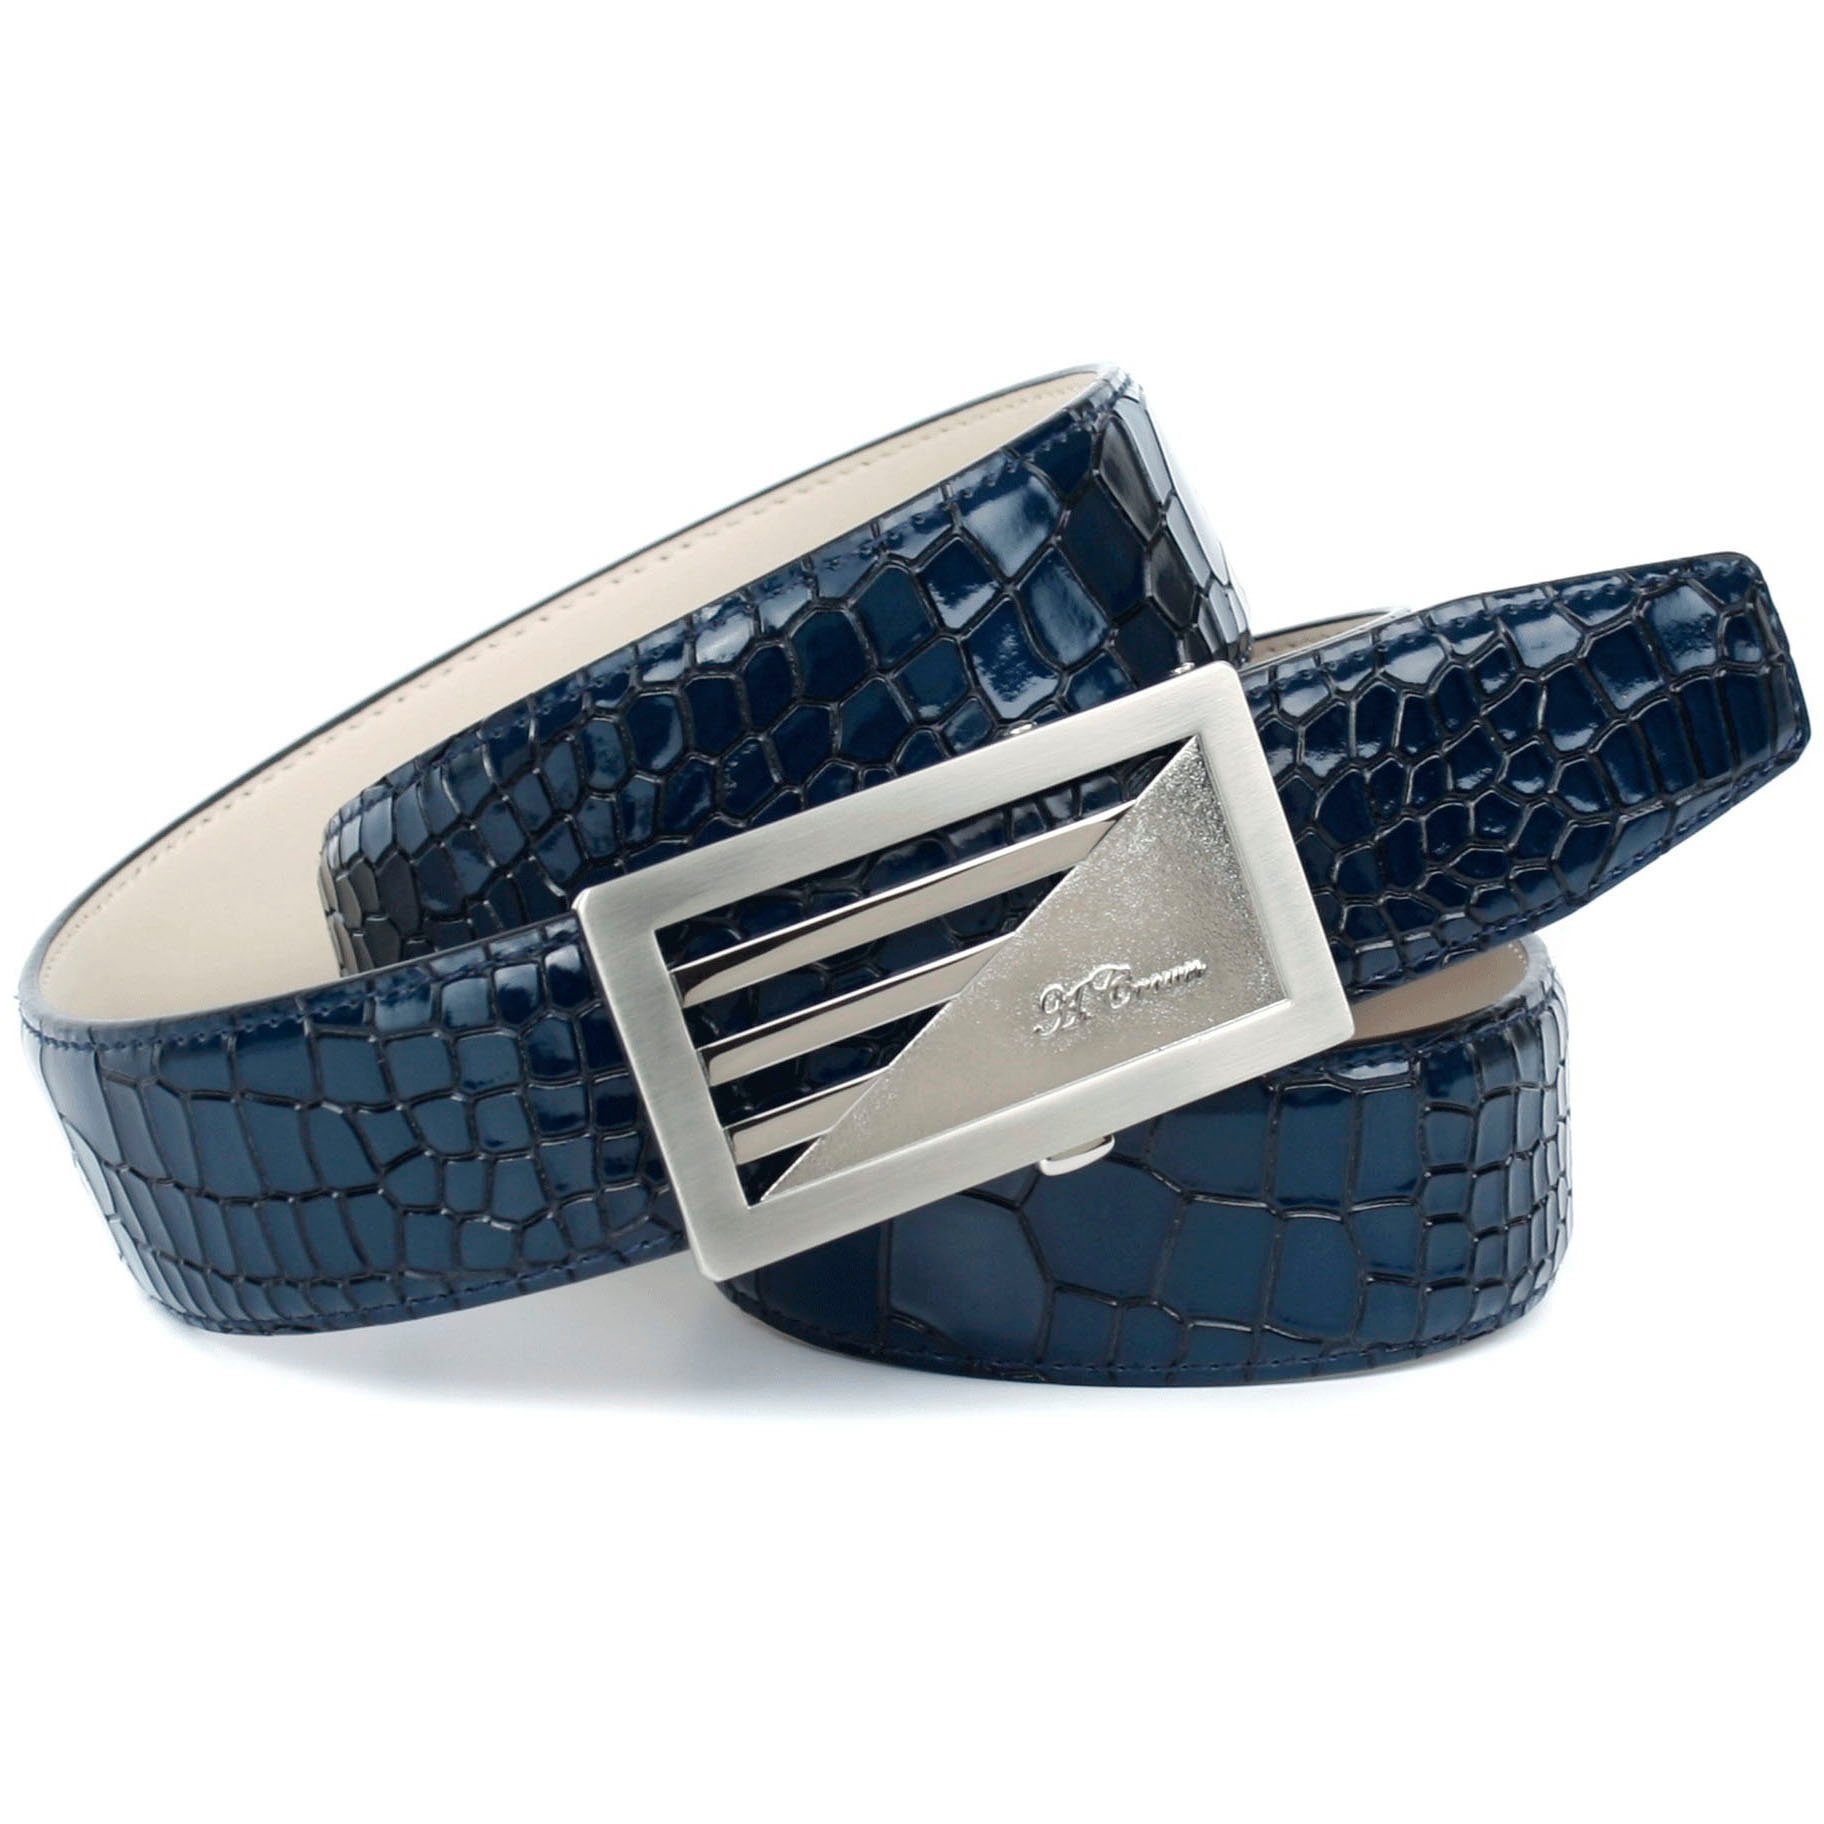 Anthoni Crown Ledergürtel in Kroko-Design in blau | Anzuggürtel